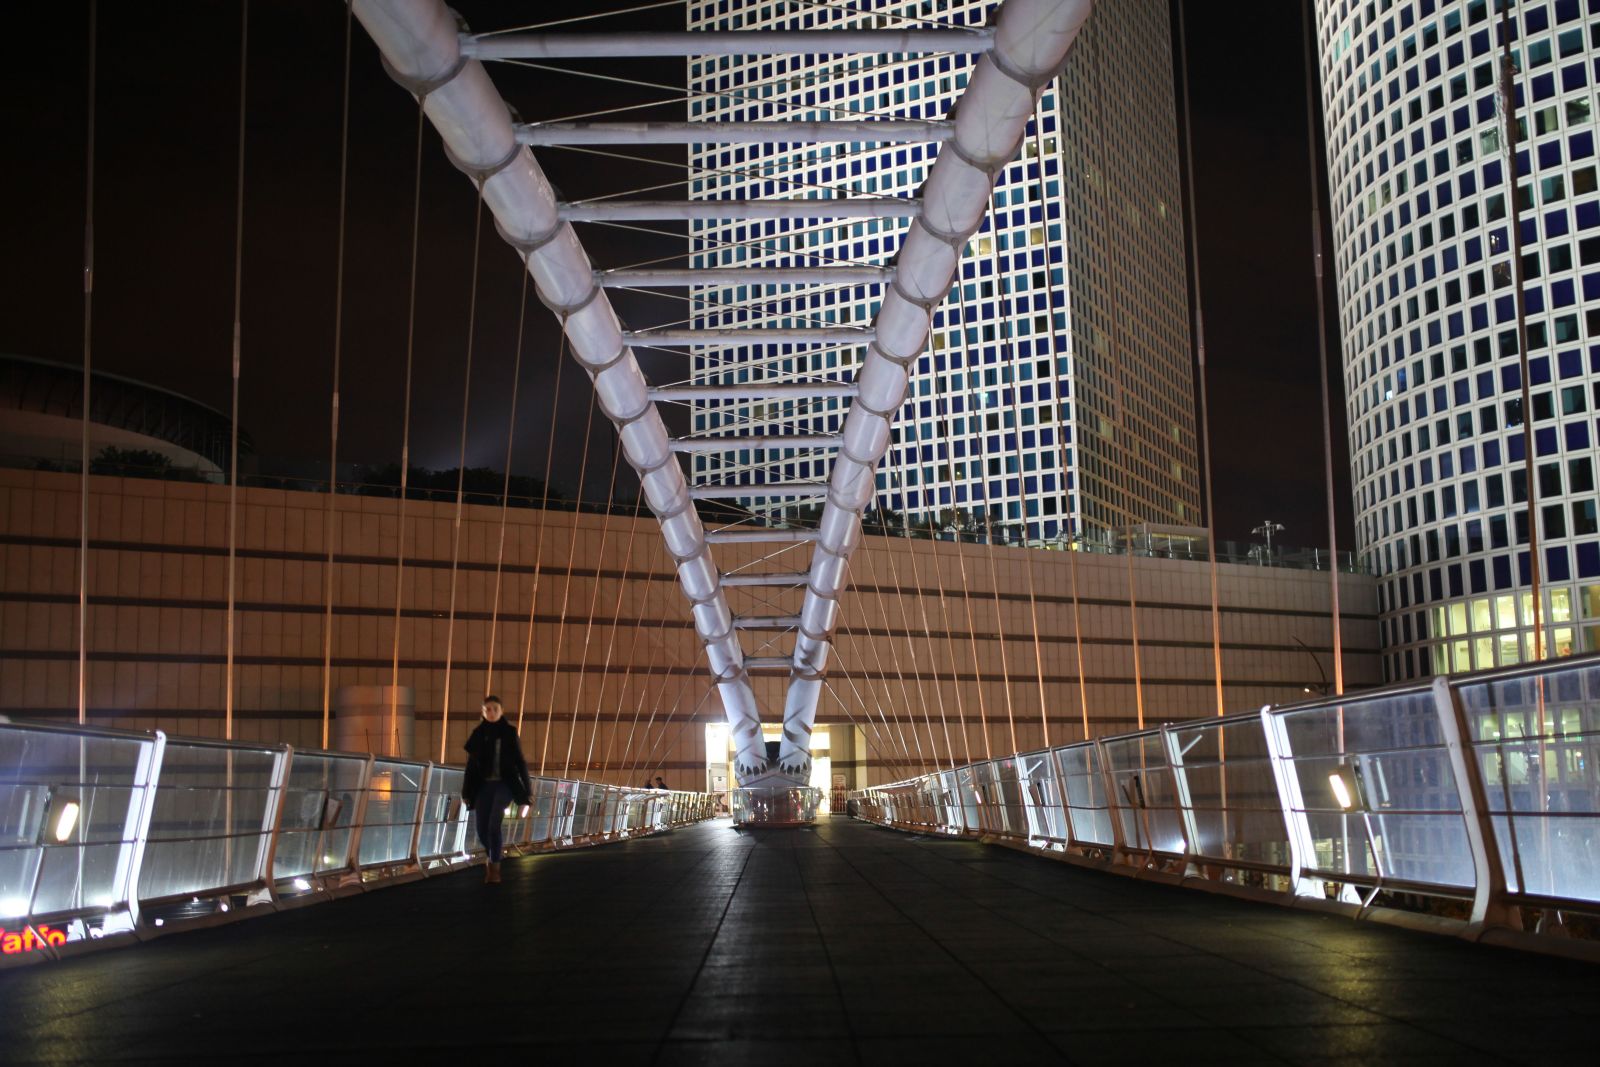 Azrieli Center Bridge in Tel Aviv may be Israel’s most used pedestrian span. Photo by FLASH90